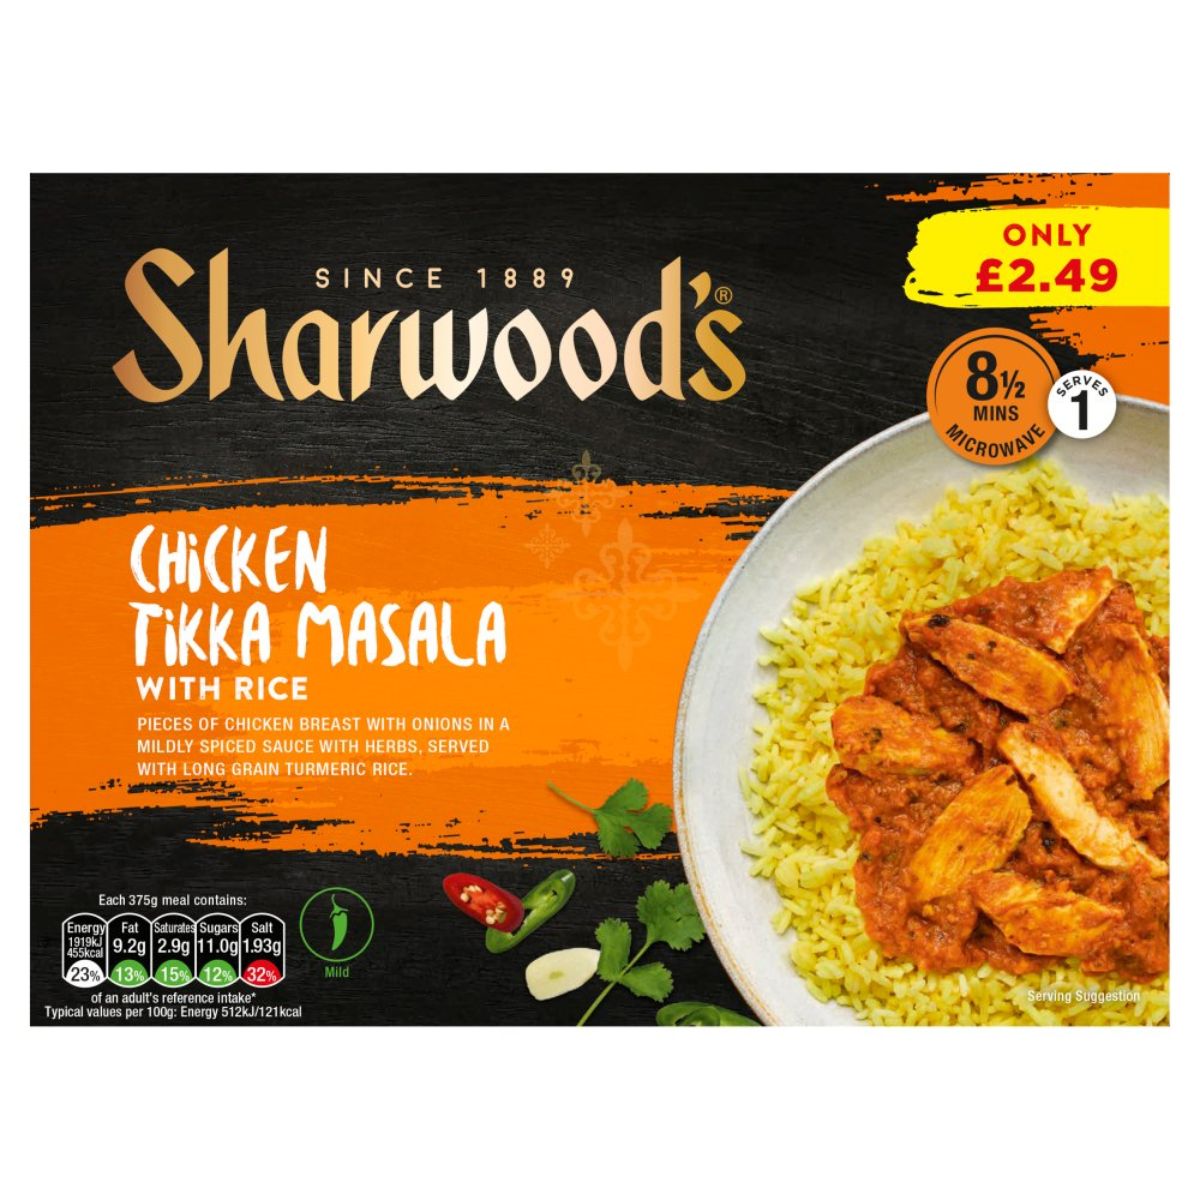 Sharwoods - Chicken Tikka Masala with Rice - 375g.